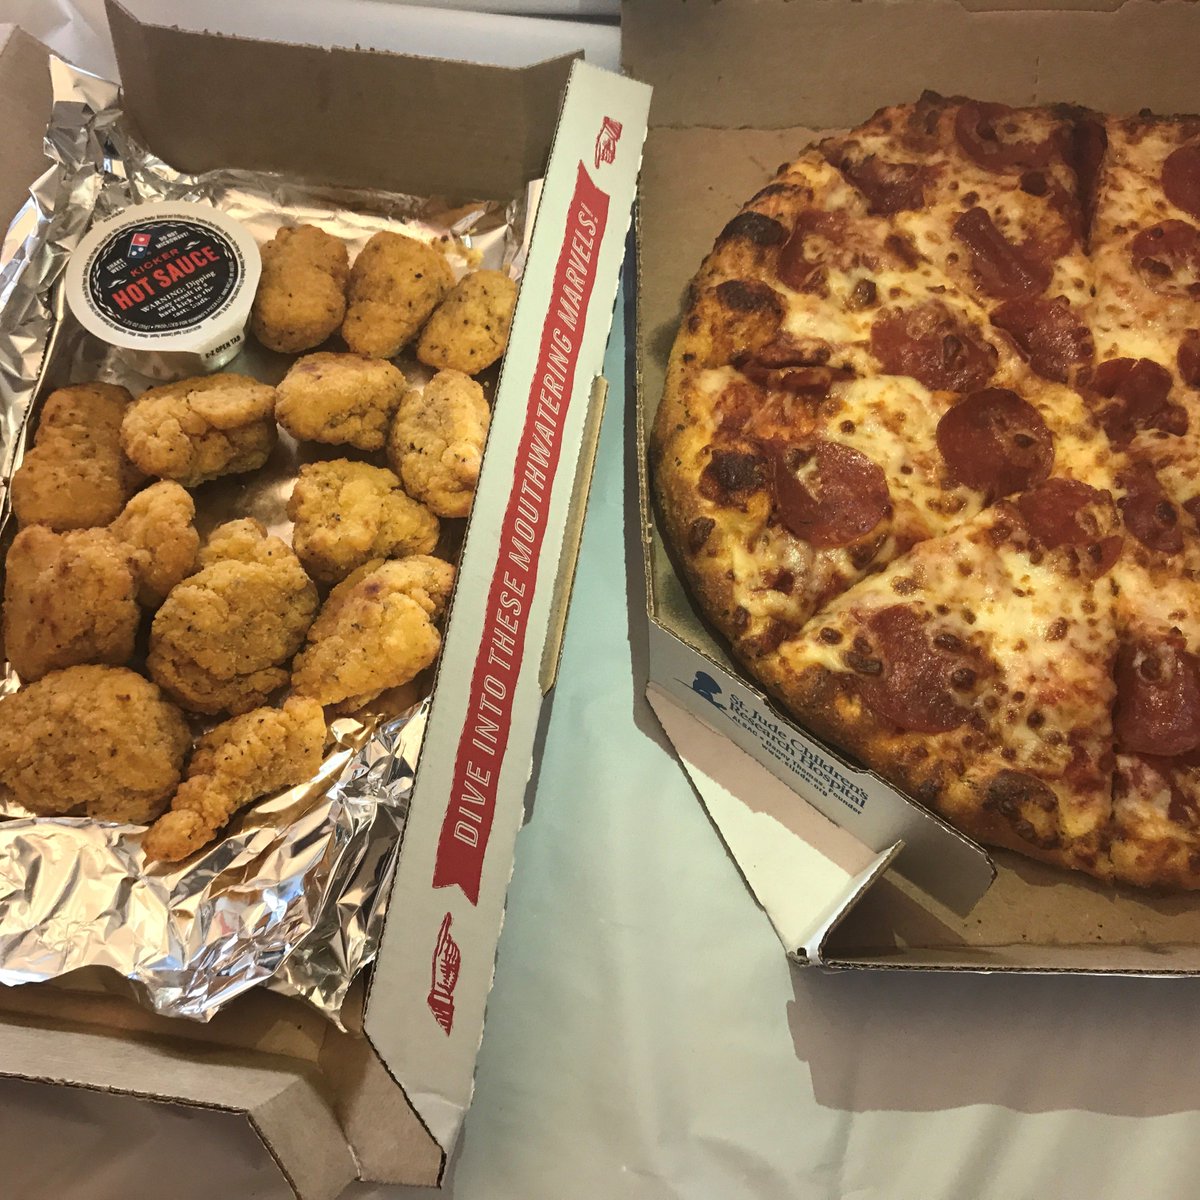 Domino's Pizza on Twitter.